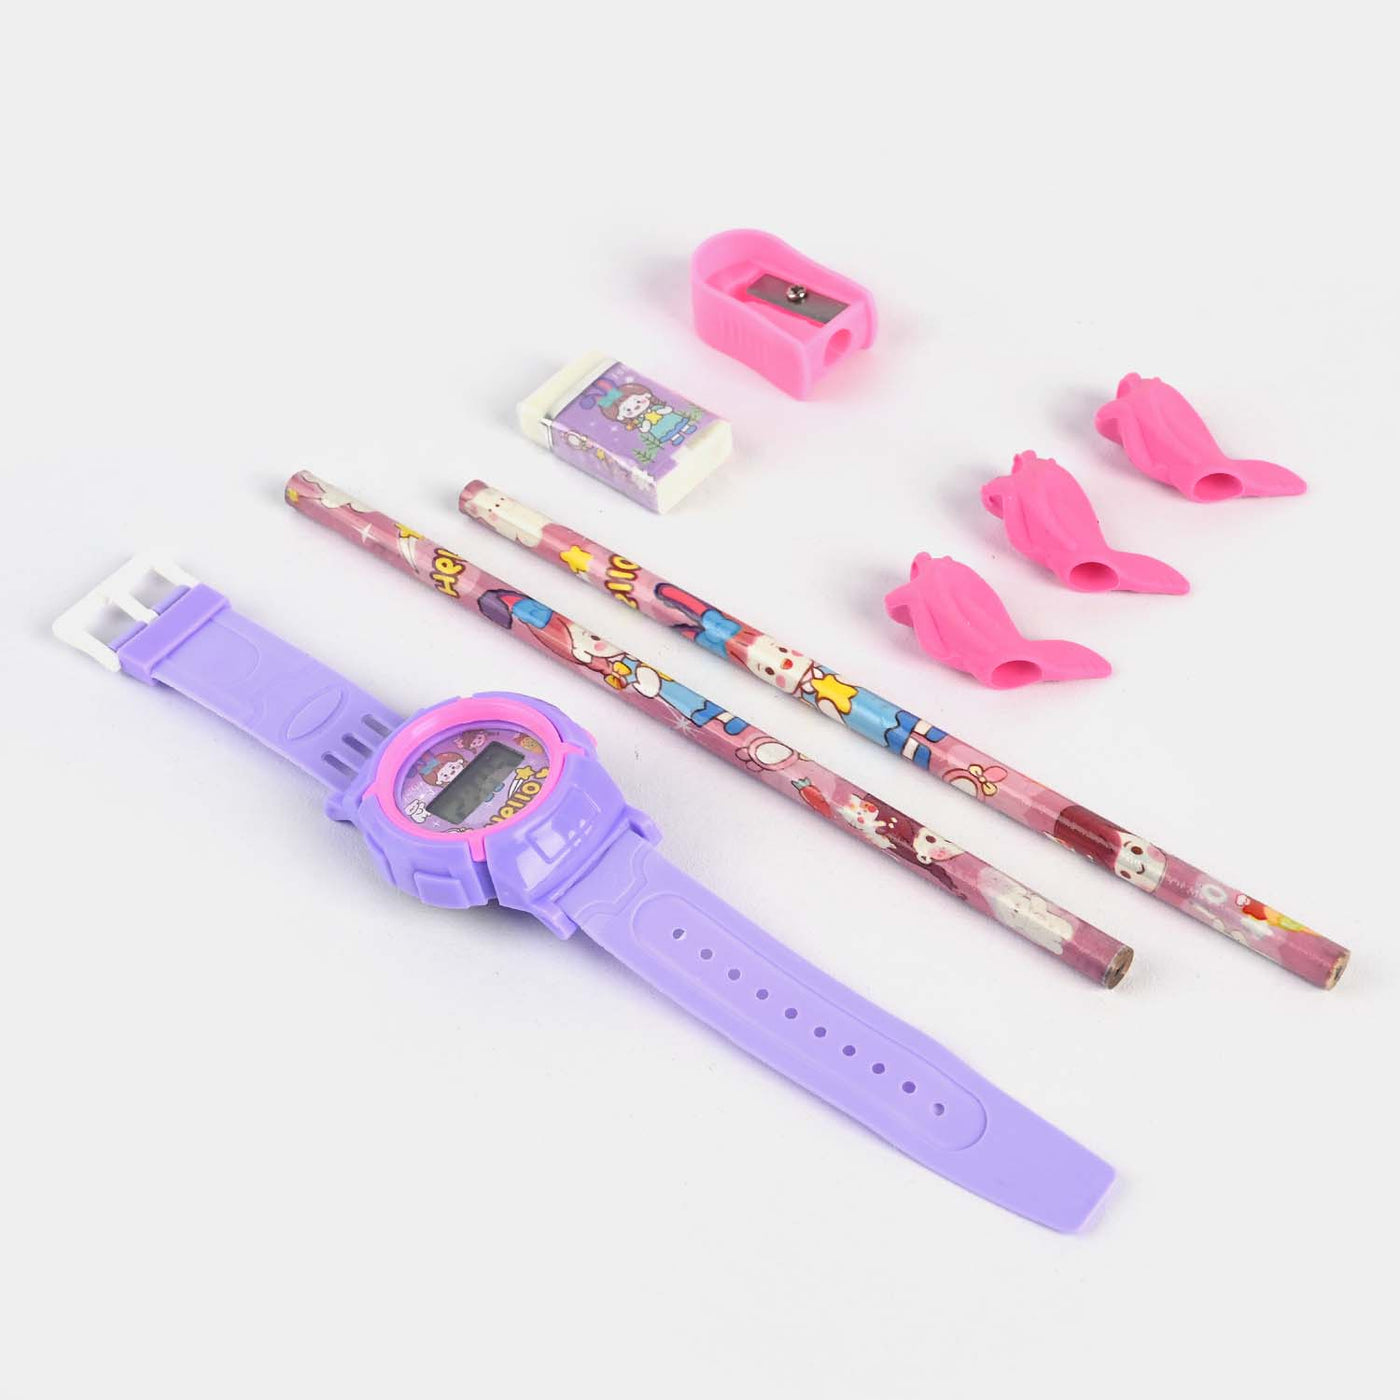 Stationery Set With Wristwatch For Kids